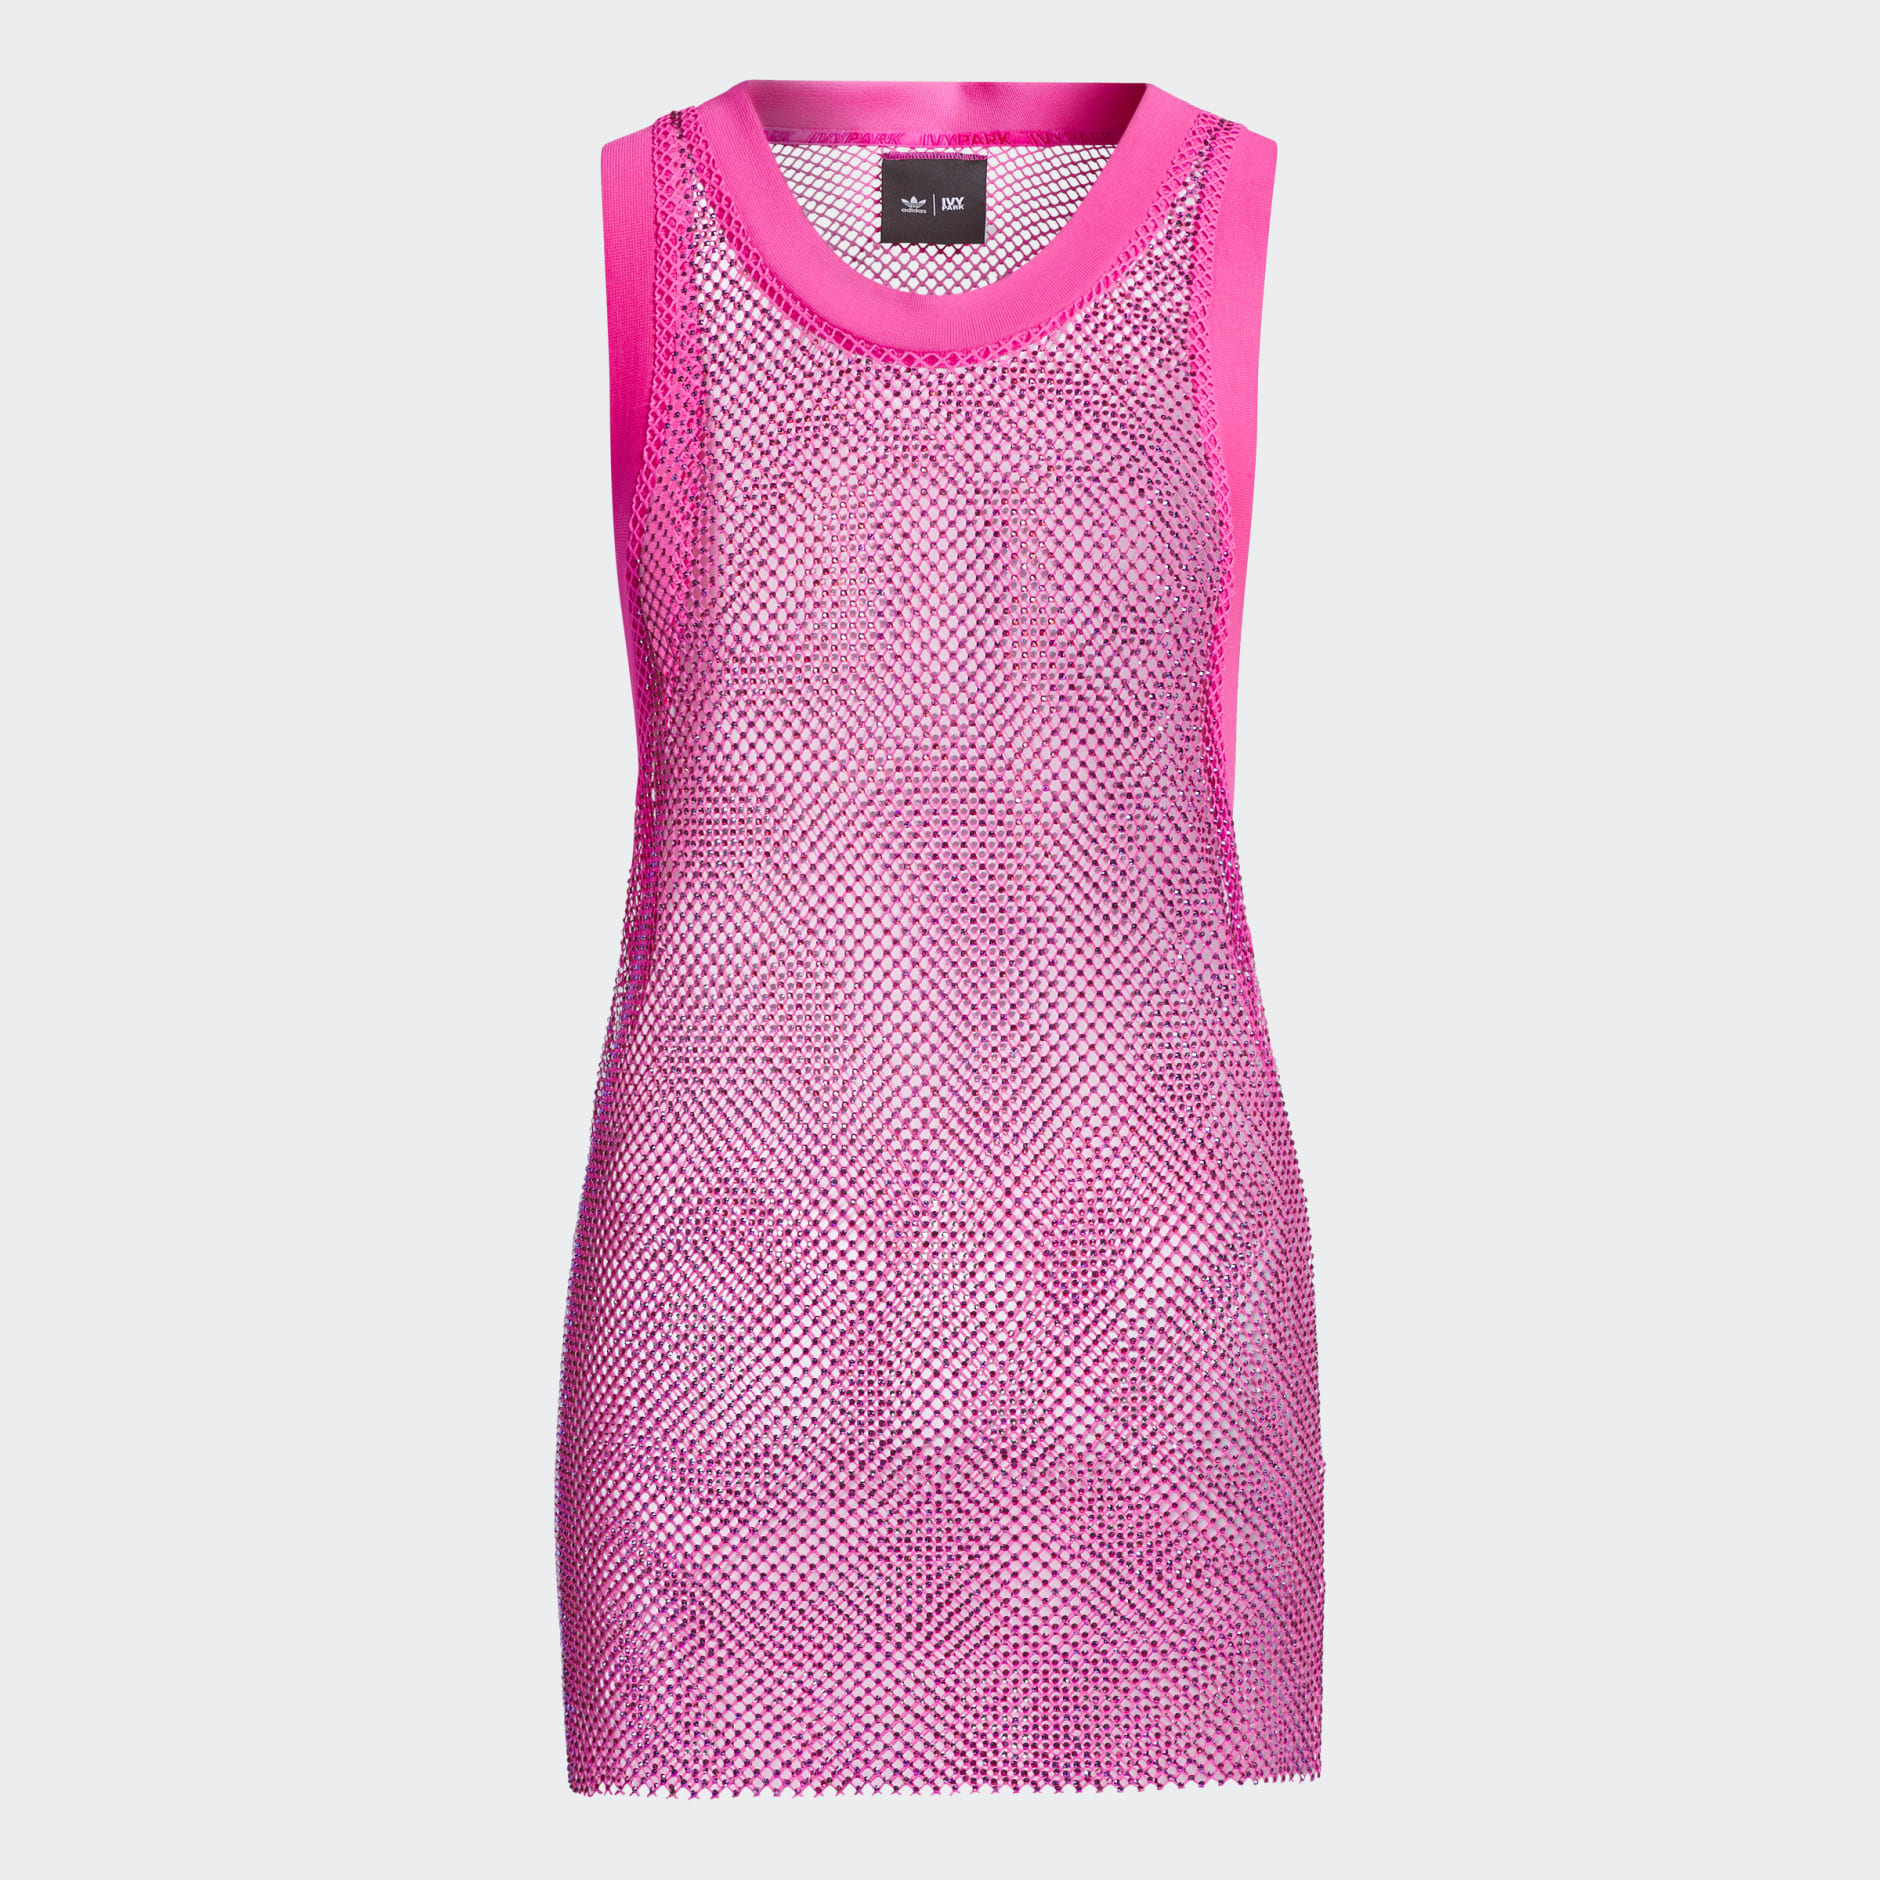 Clothing - IVY PARK Crystal Mesh Tank Top (All Gender) - Pink